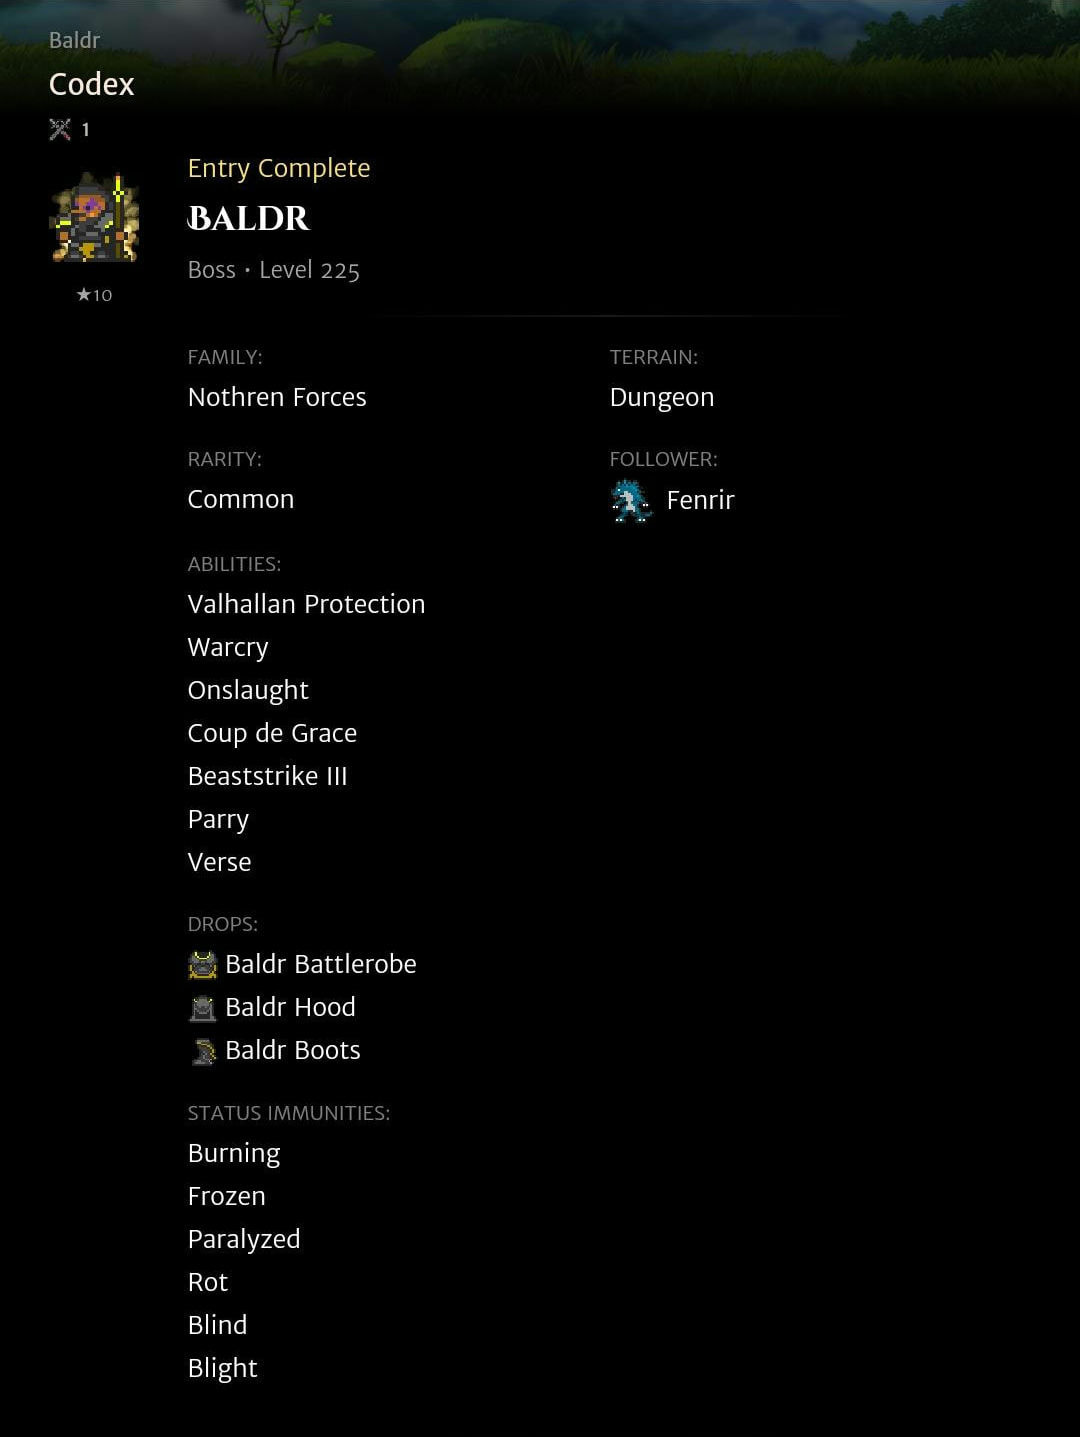 Baldr codex entry